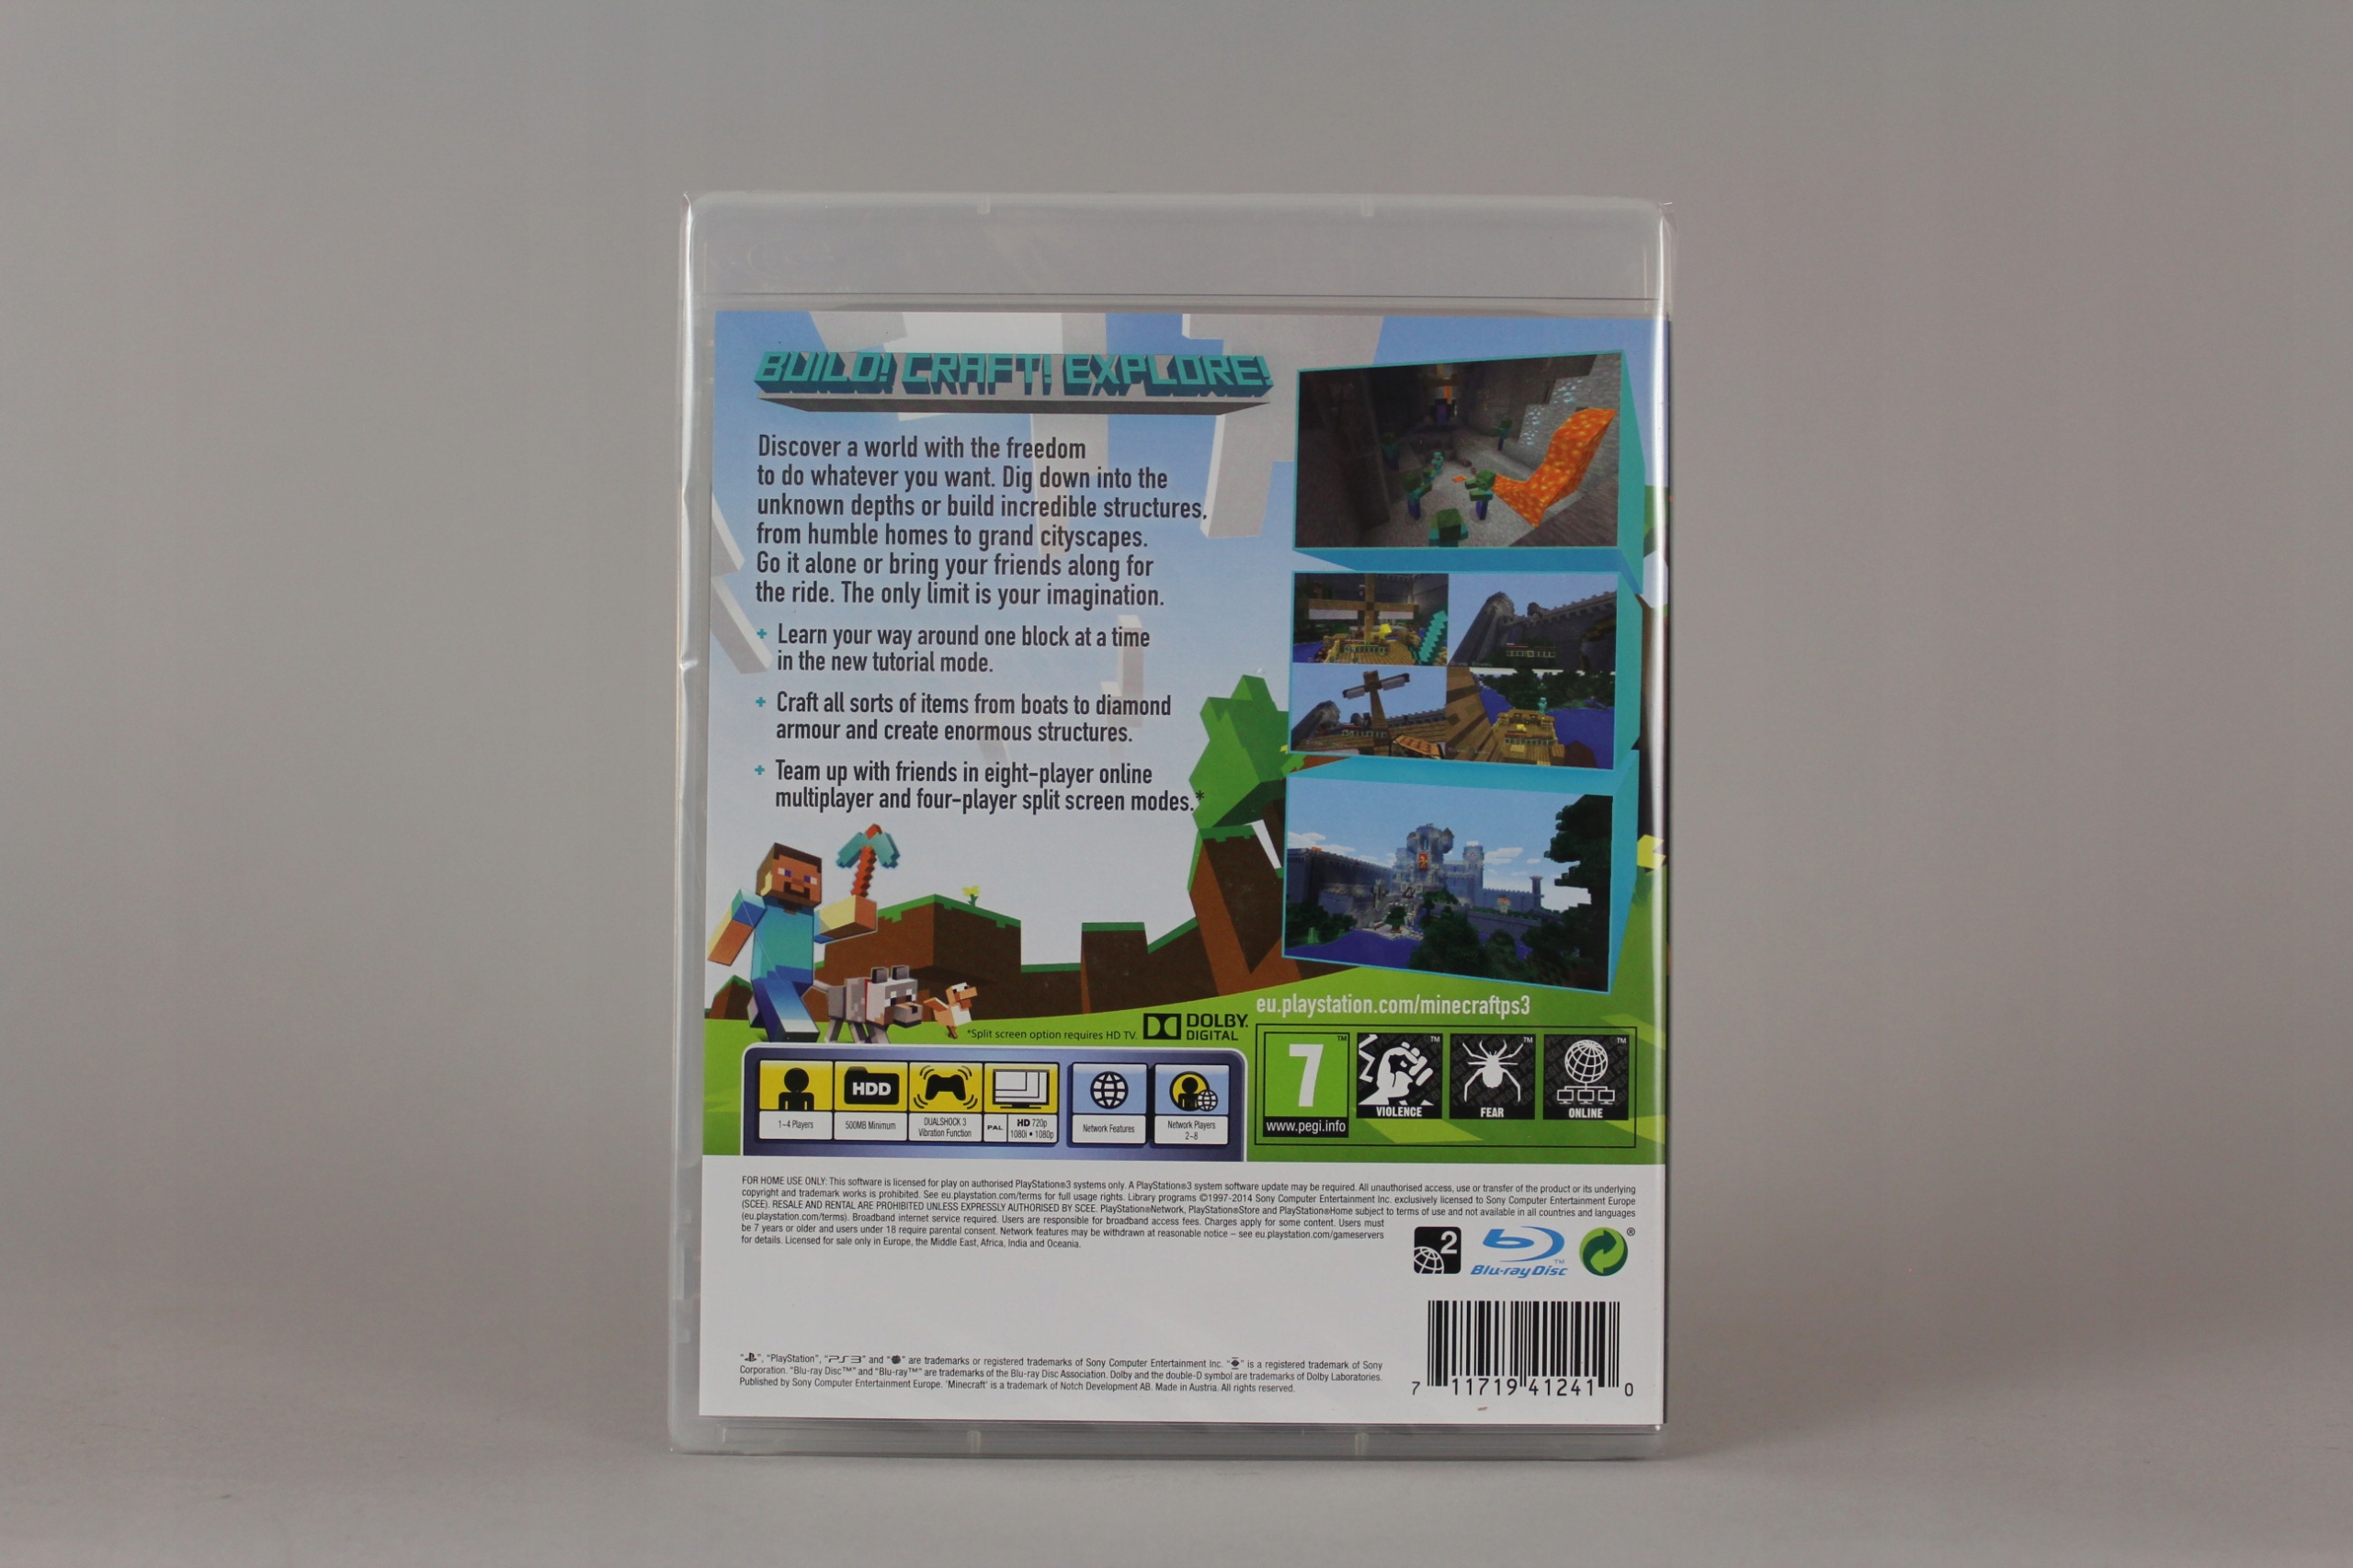 Minecraft Playstation Edition Playstation 3 PS3 711719412410